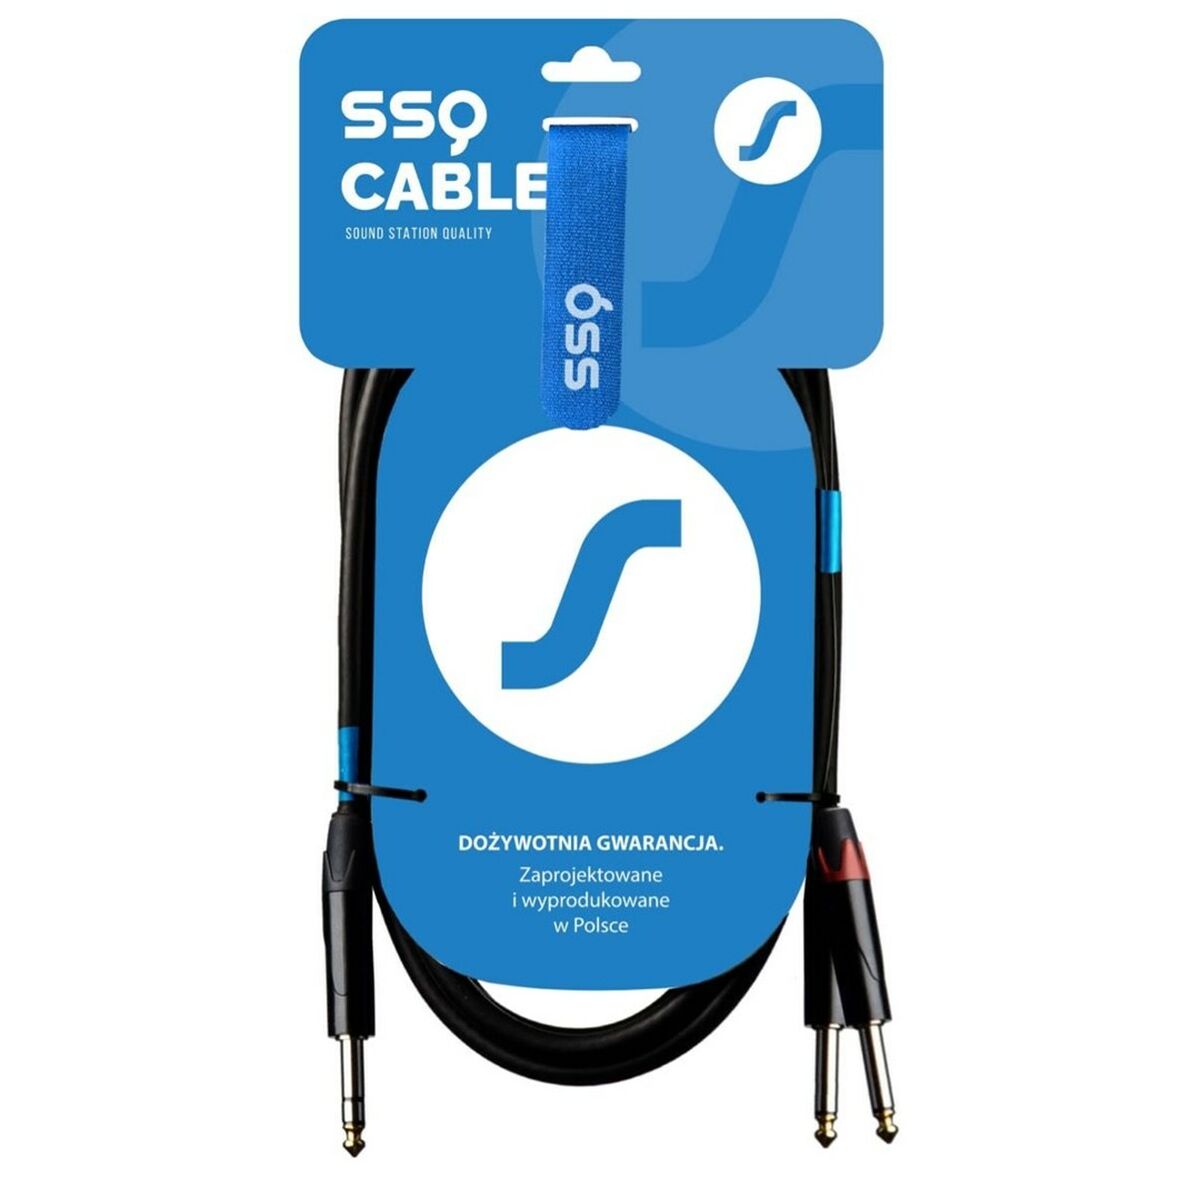 Câble jack Sound station quality (SSQ) SS-1453 2 m